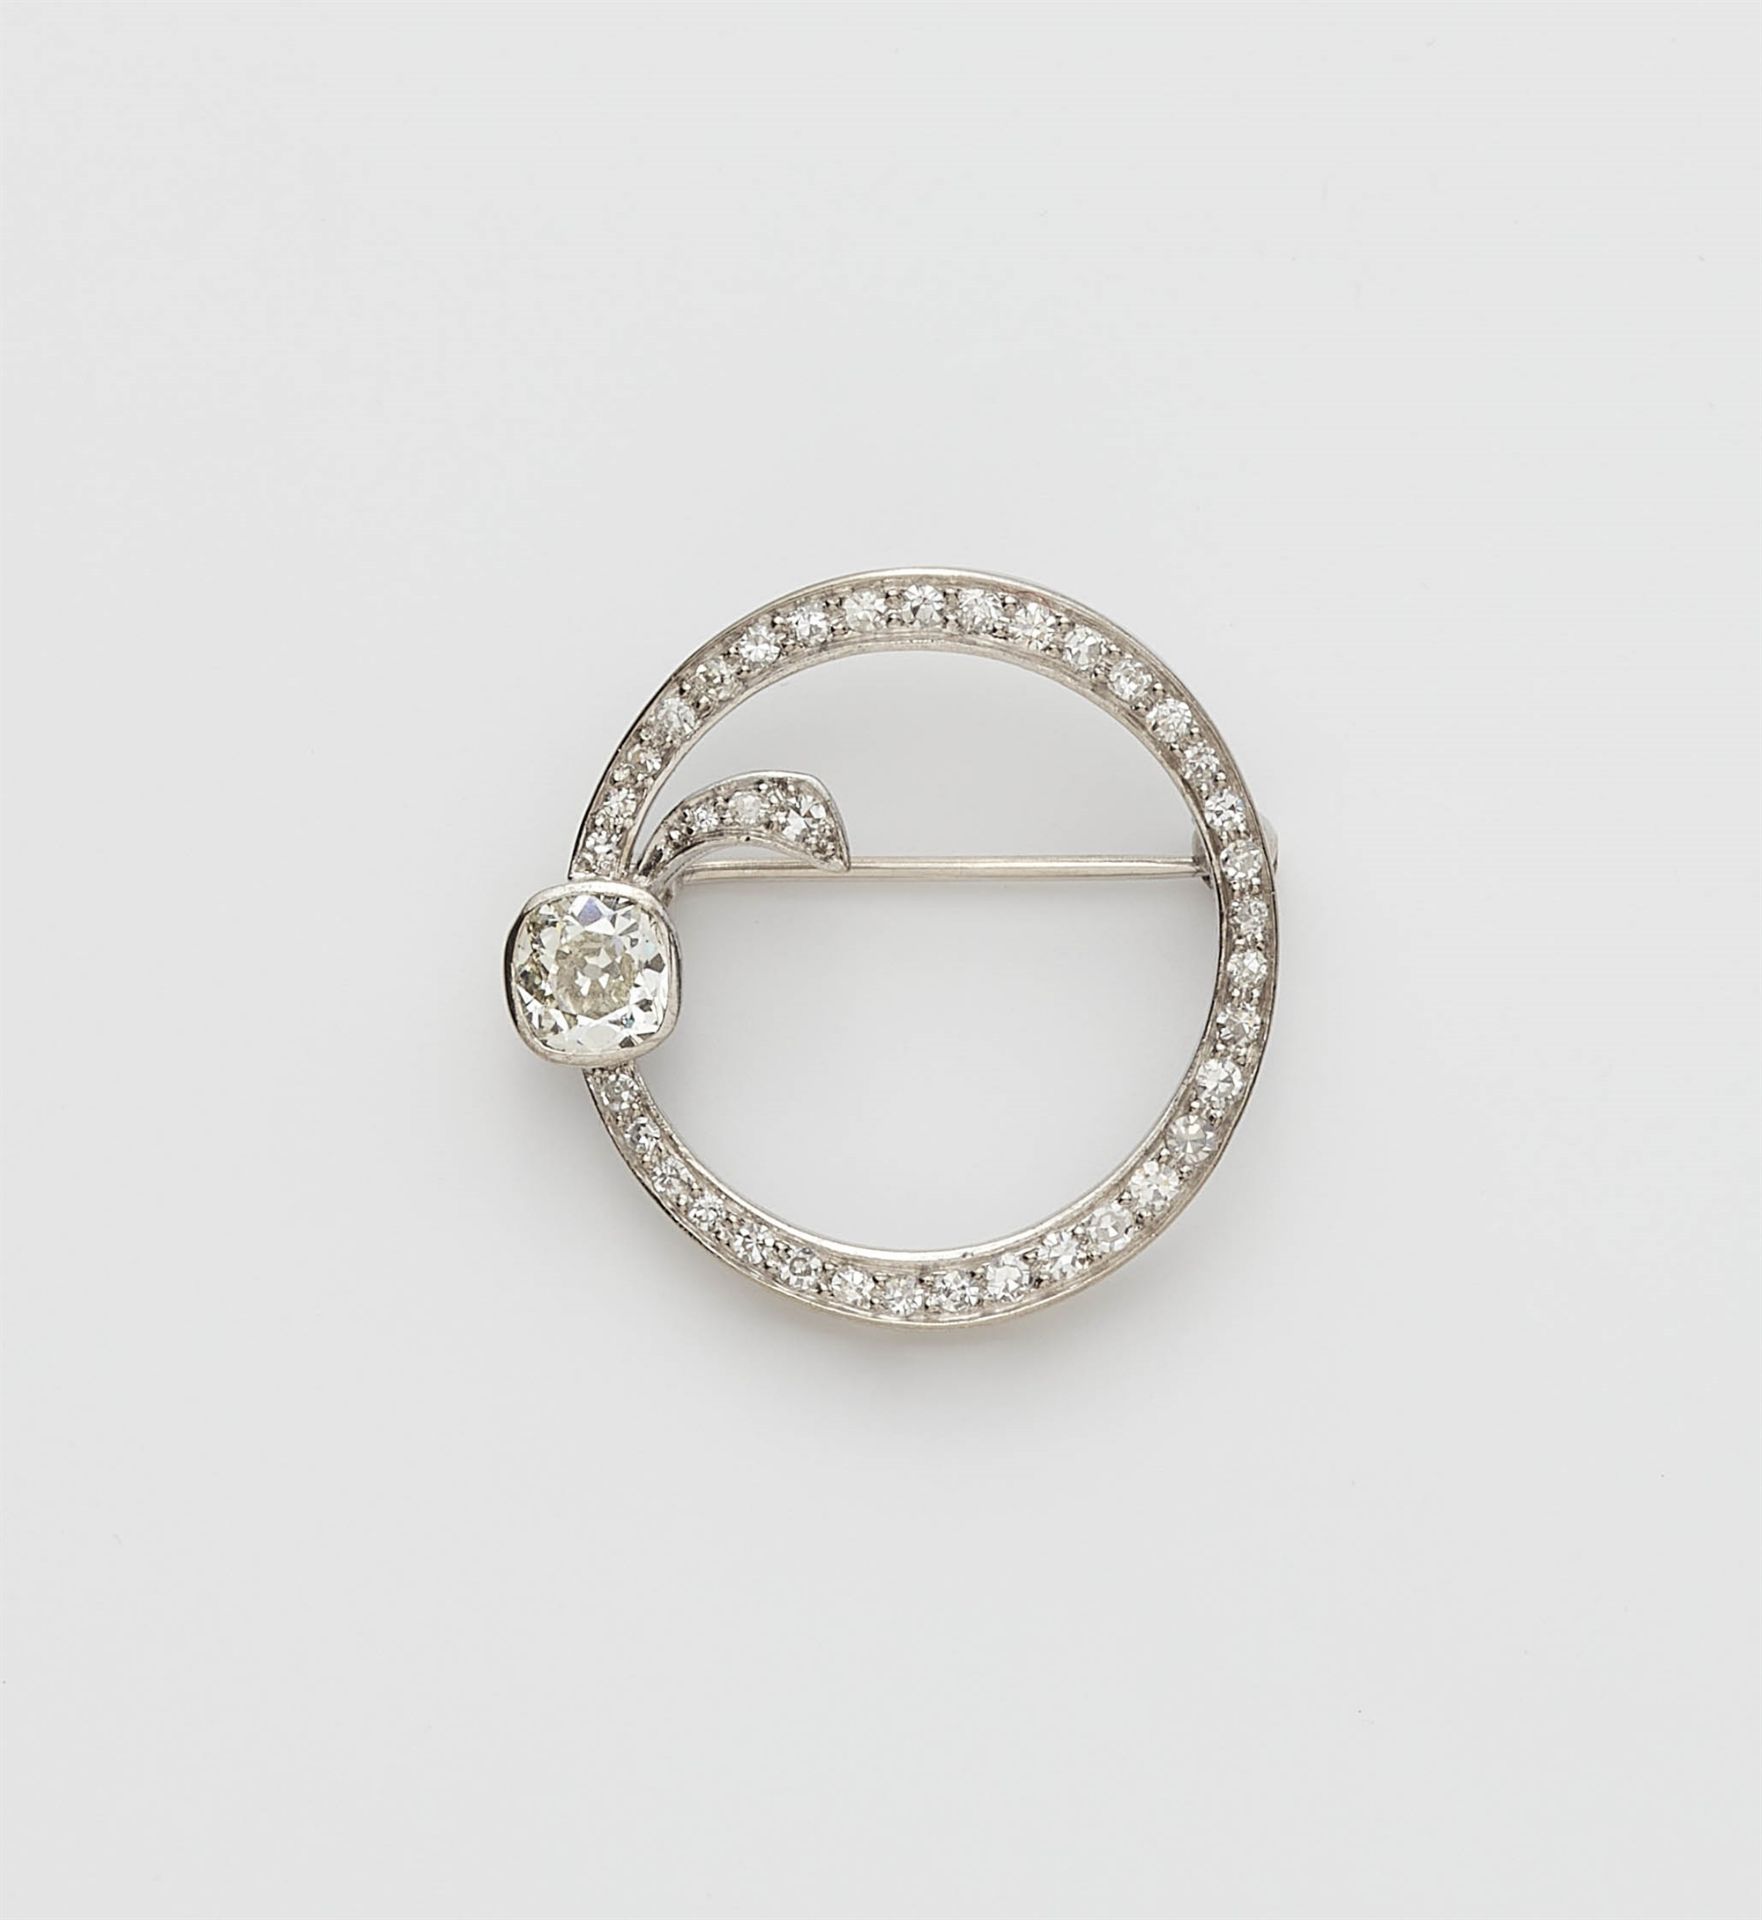 An Art Deco 18k white gold diamond brooch.